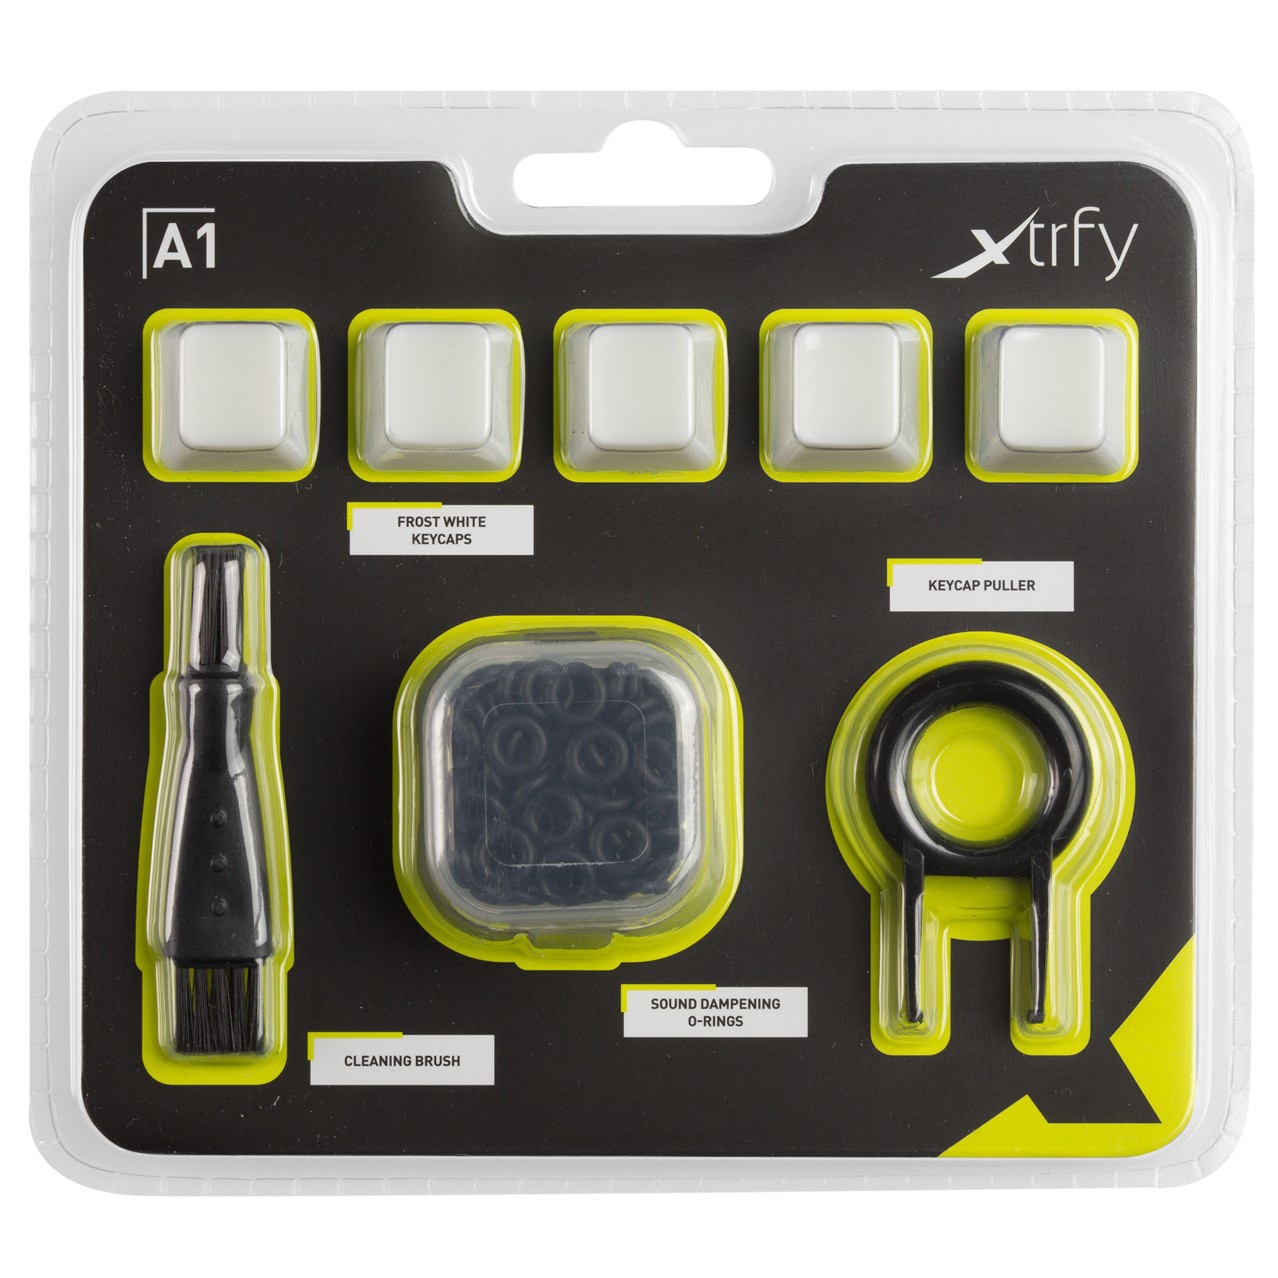 Xtrfy A1 mekaniskt tangentbords kit - Elgiganten